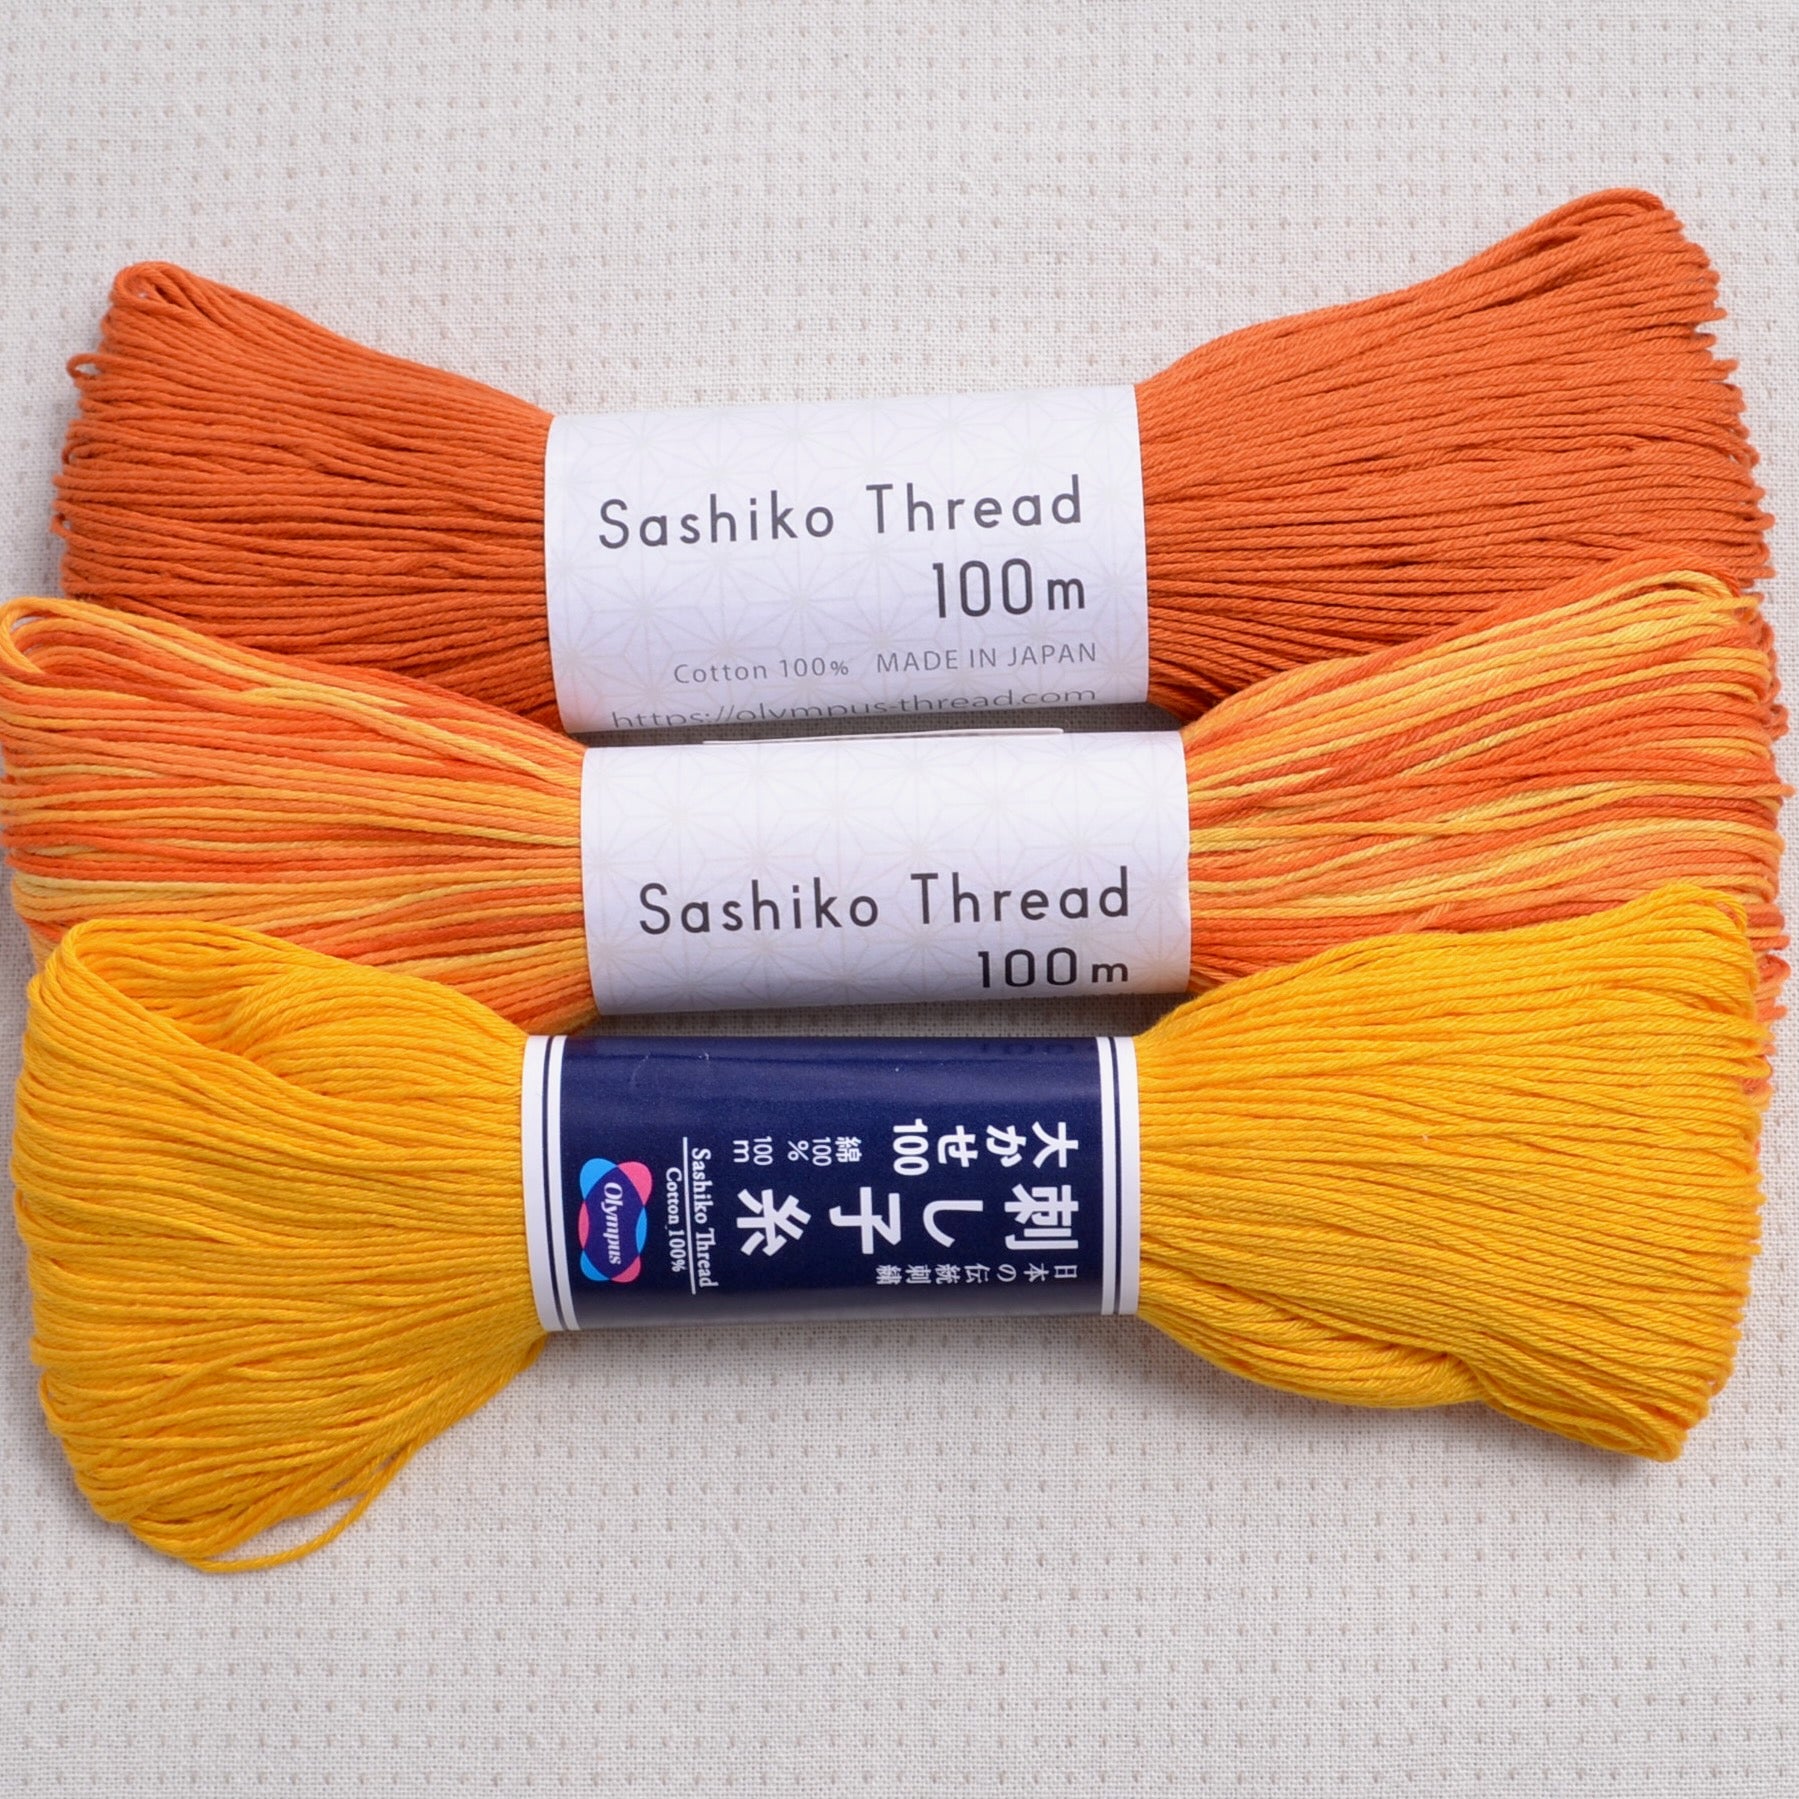 orange and yellow sashiko threads